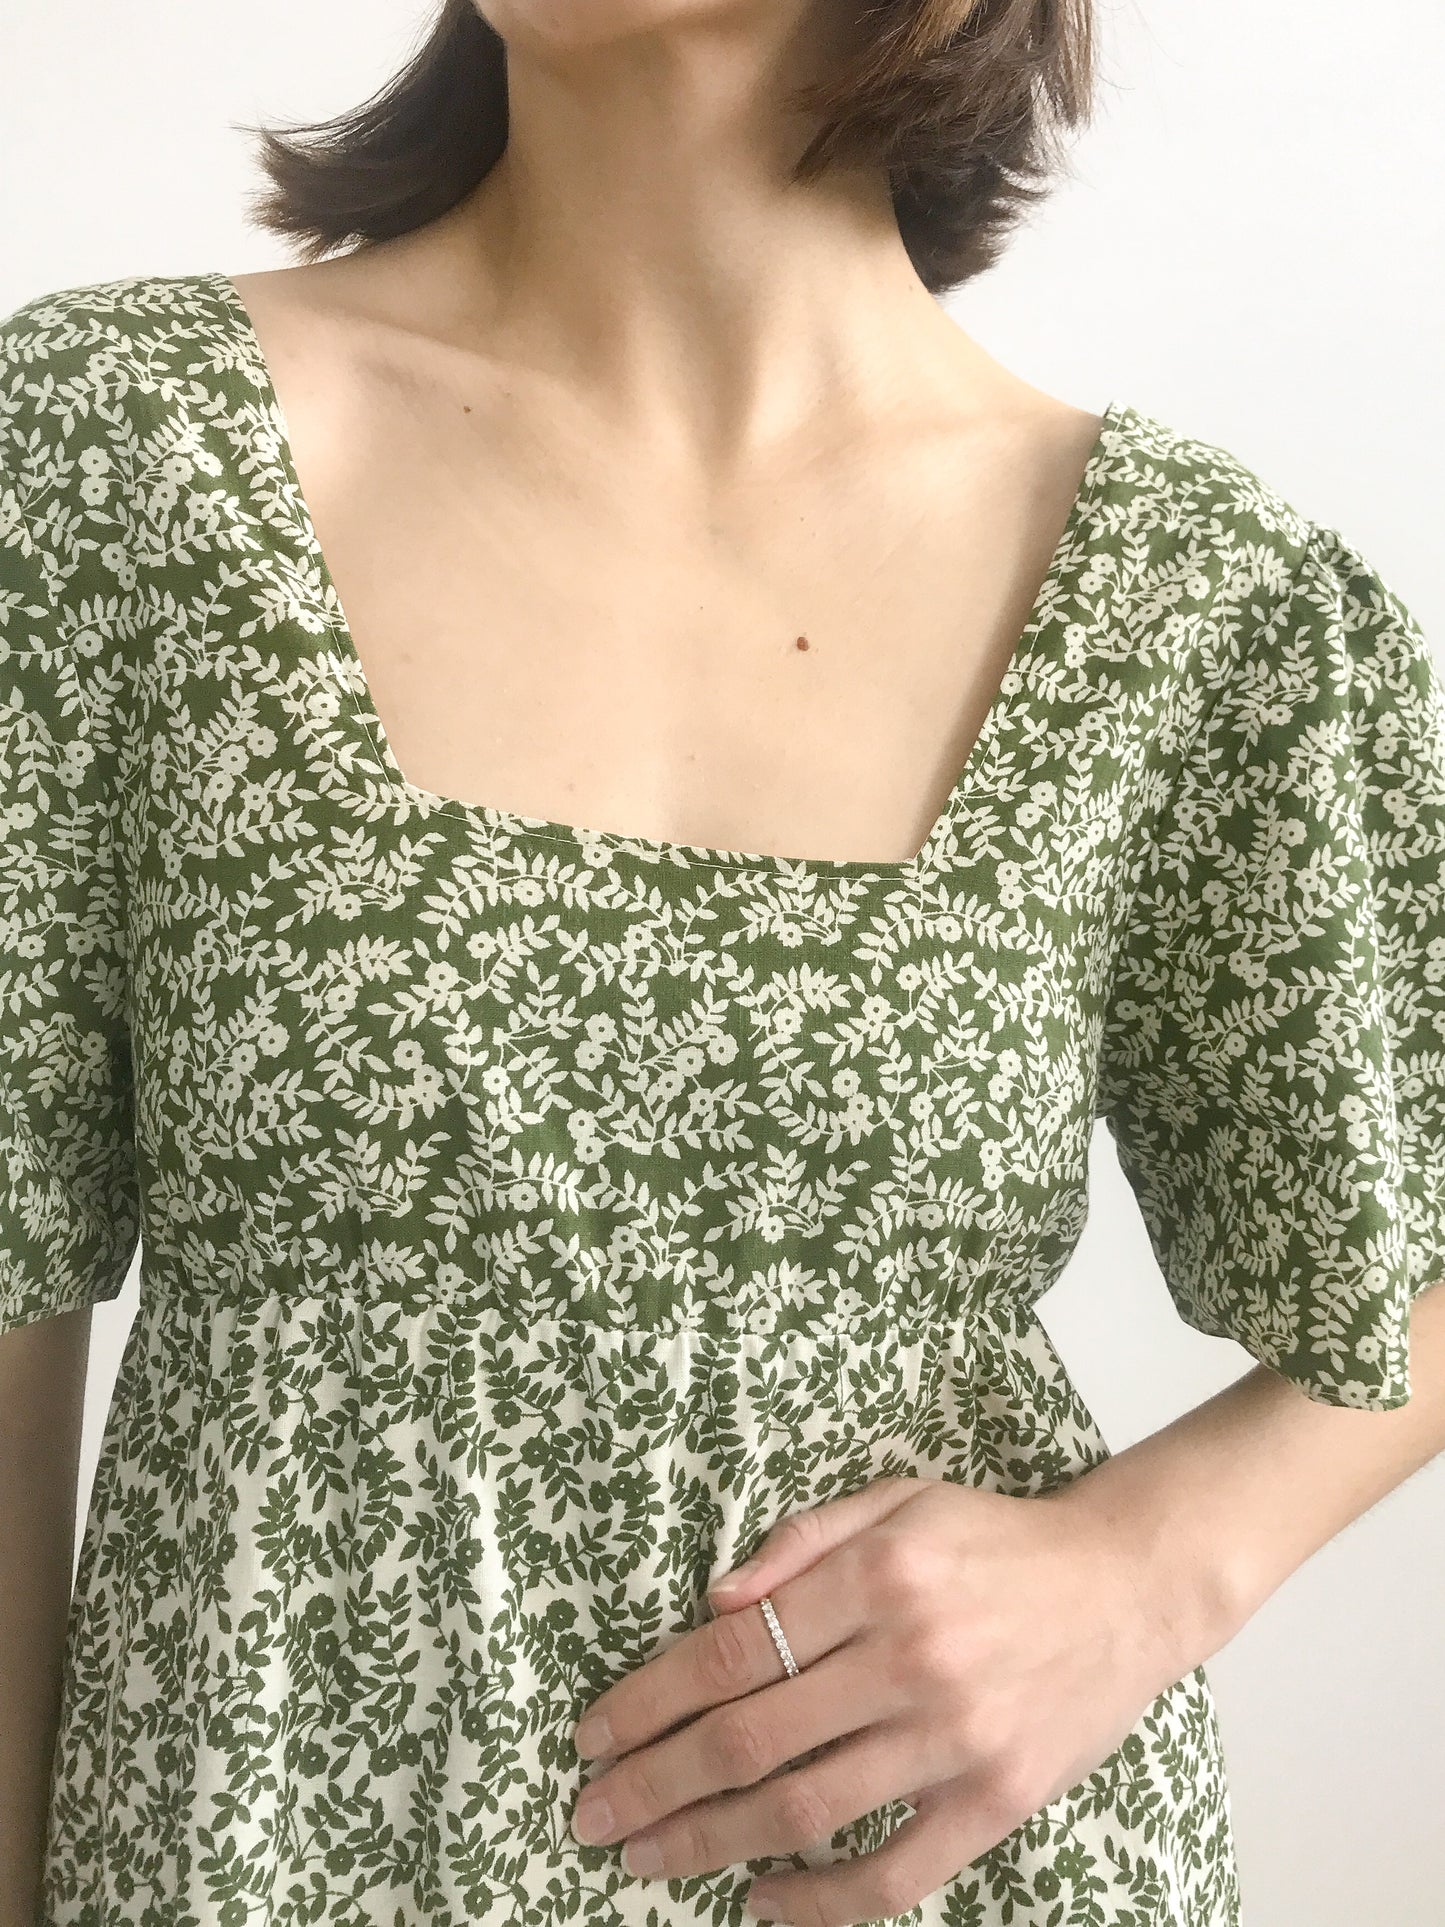 1970s Green Floral Tiered Prairie Dress